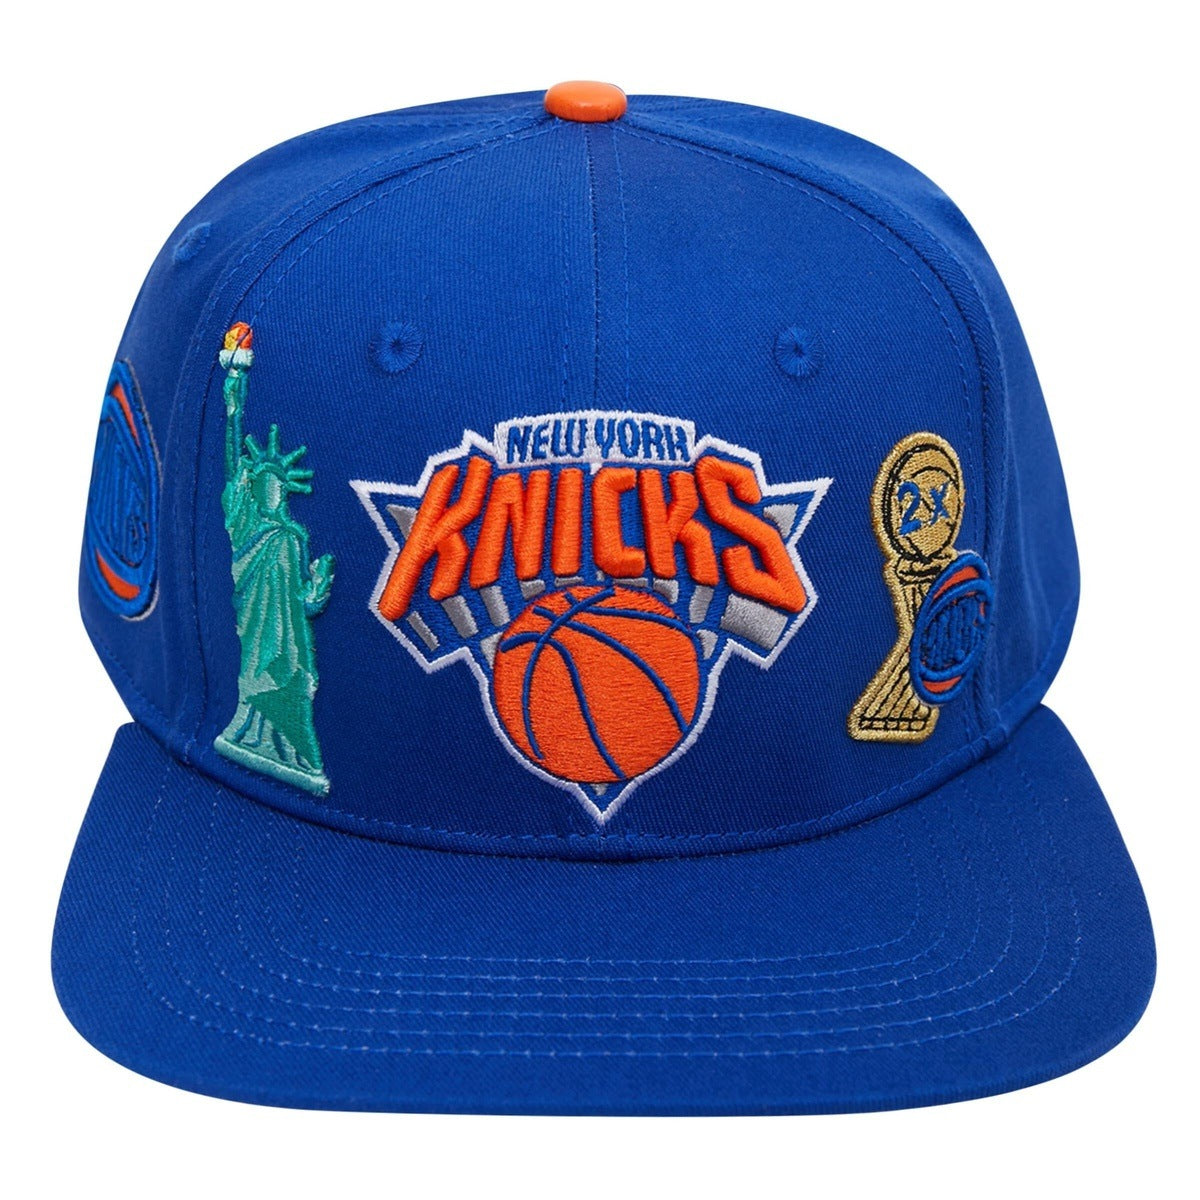 NBA NEW YORK KNICKS CITY DOUBLE FRONT LOGO UNISEX SNAPBACK HAT (ROYALBLUE/PINK)